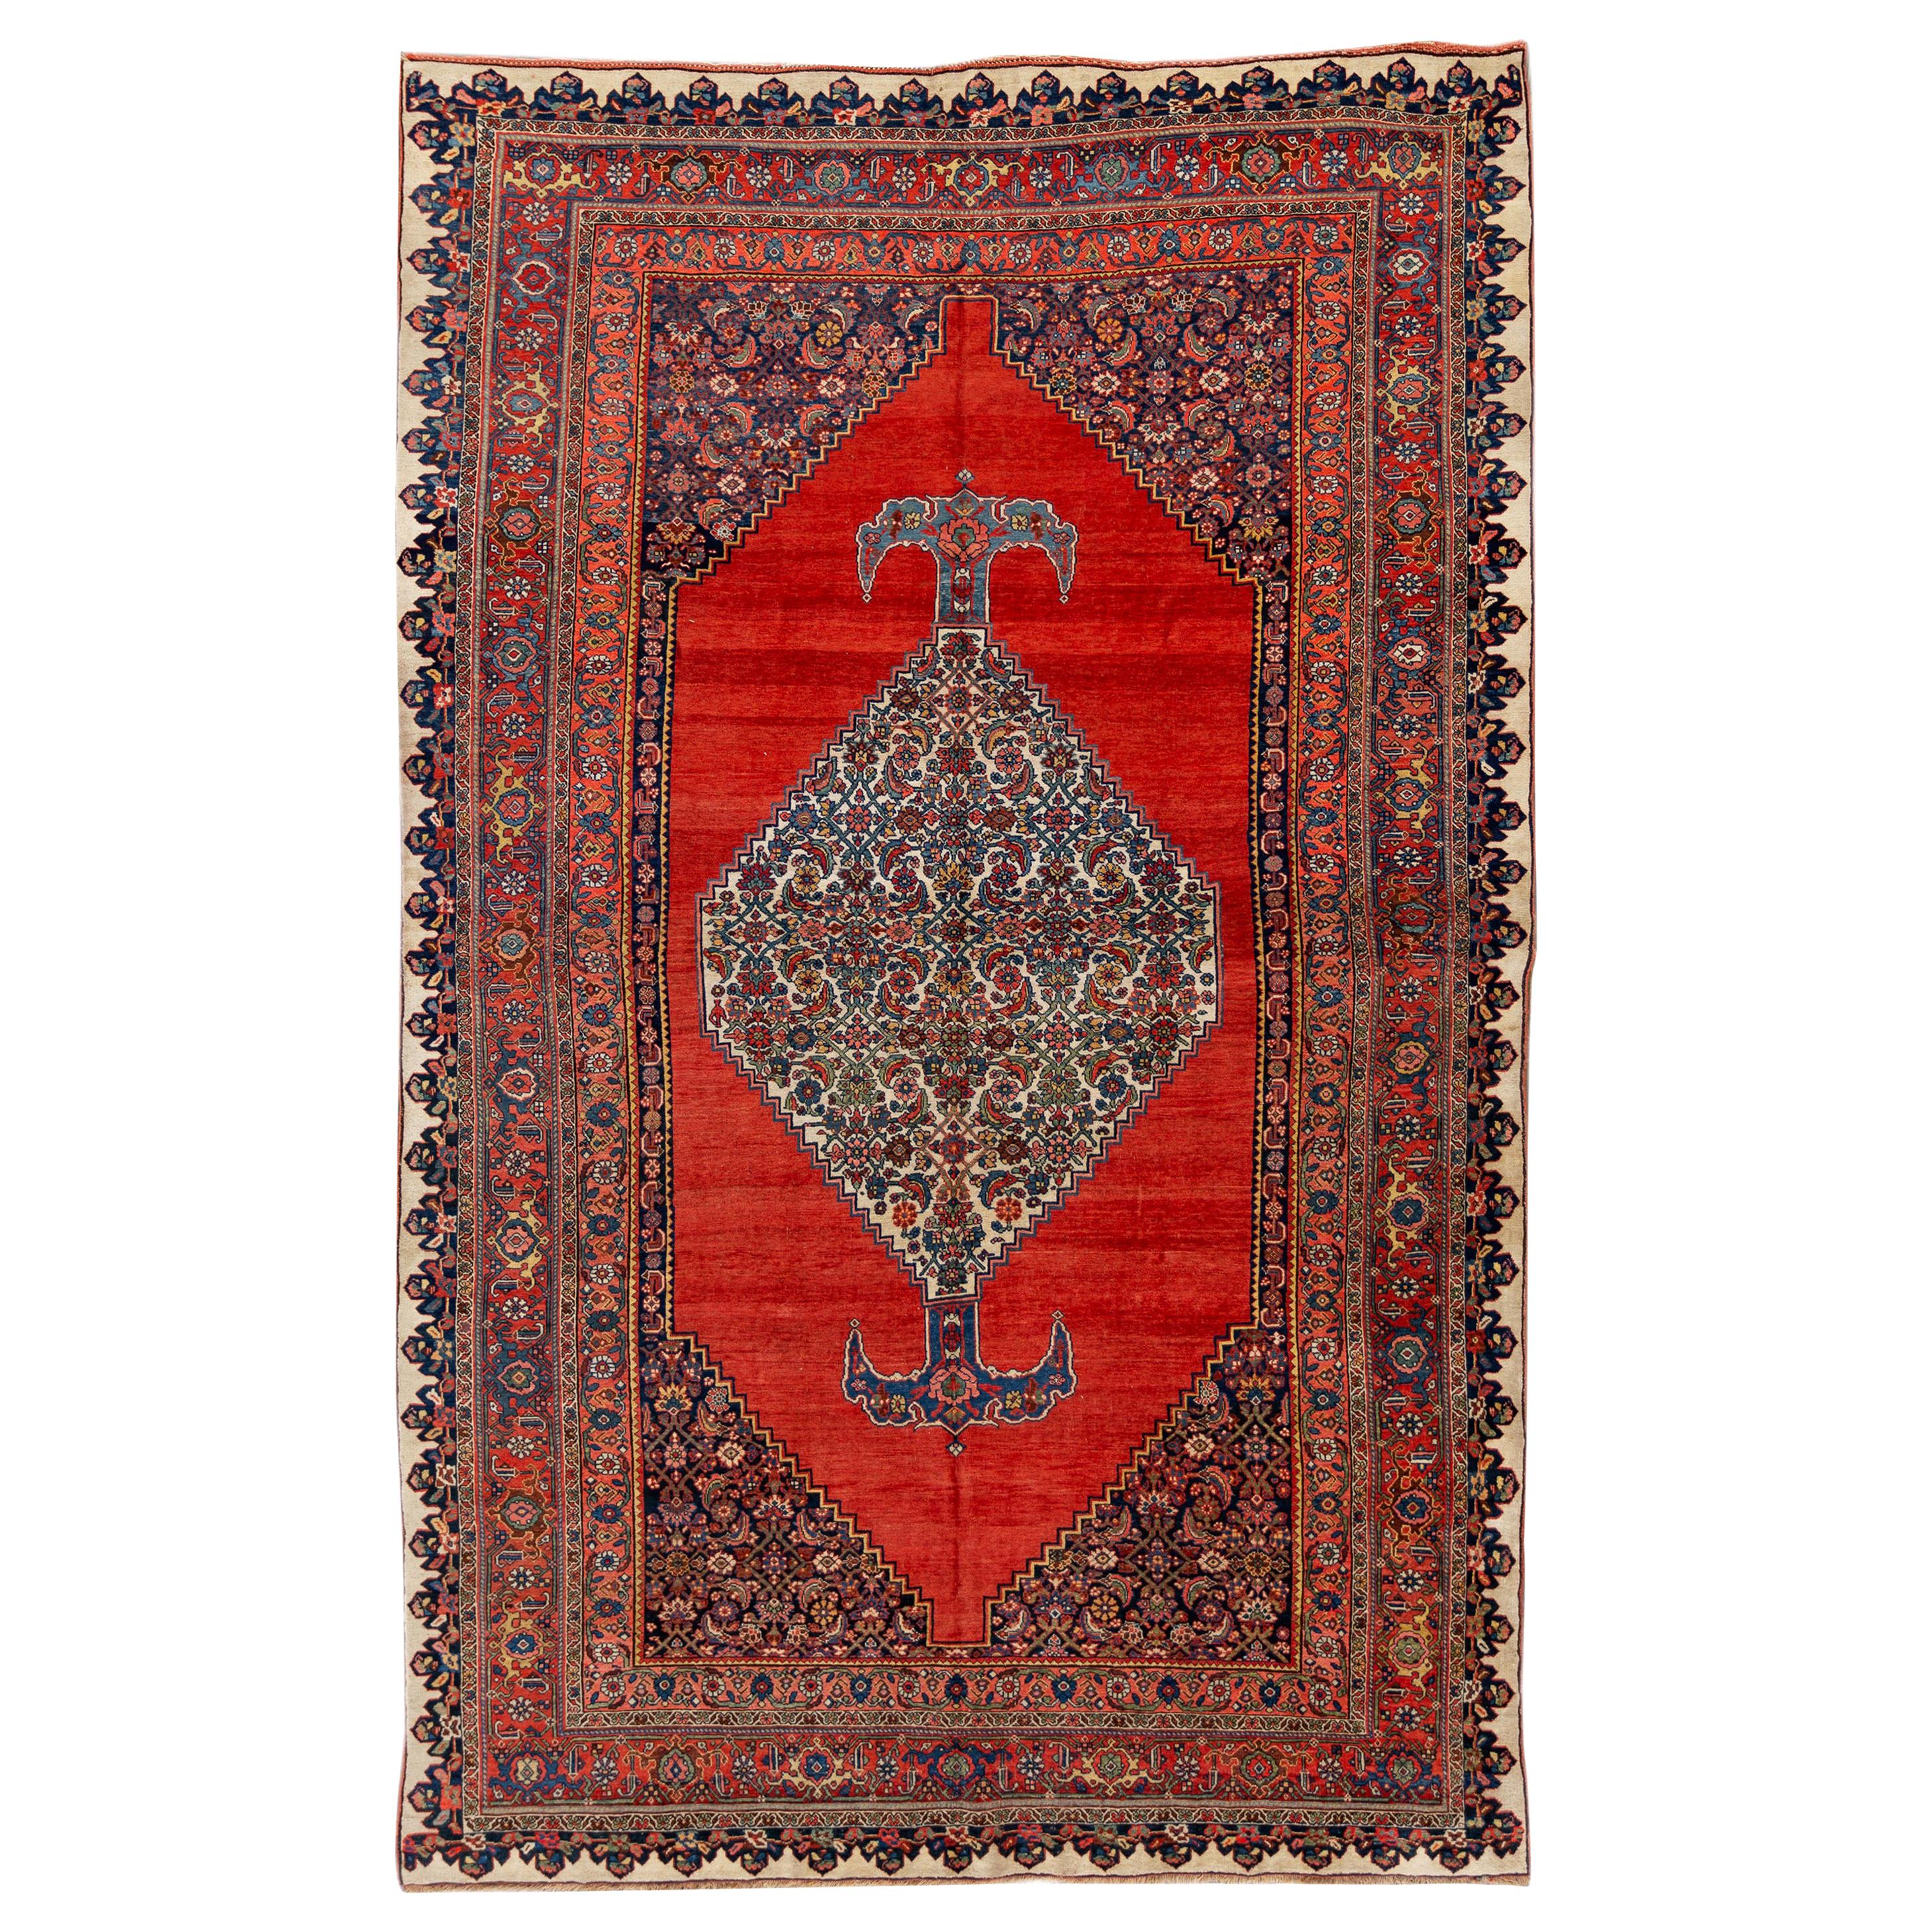 Late 19th Century Antique Bidjar Wool Rug